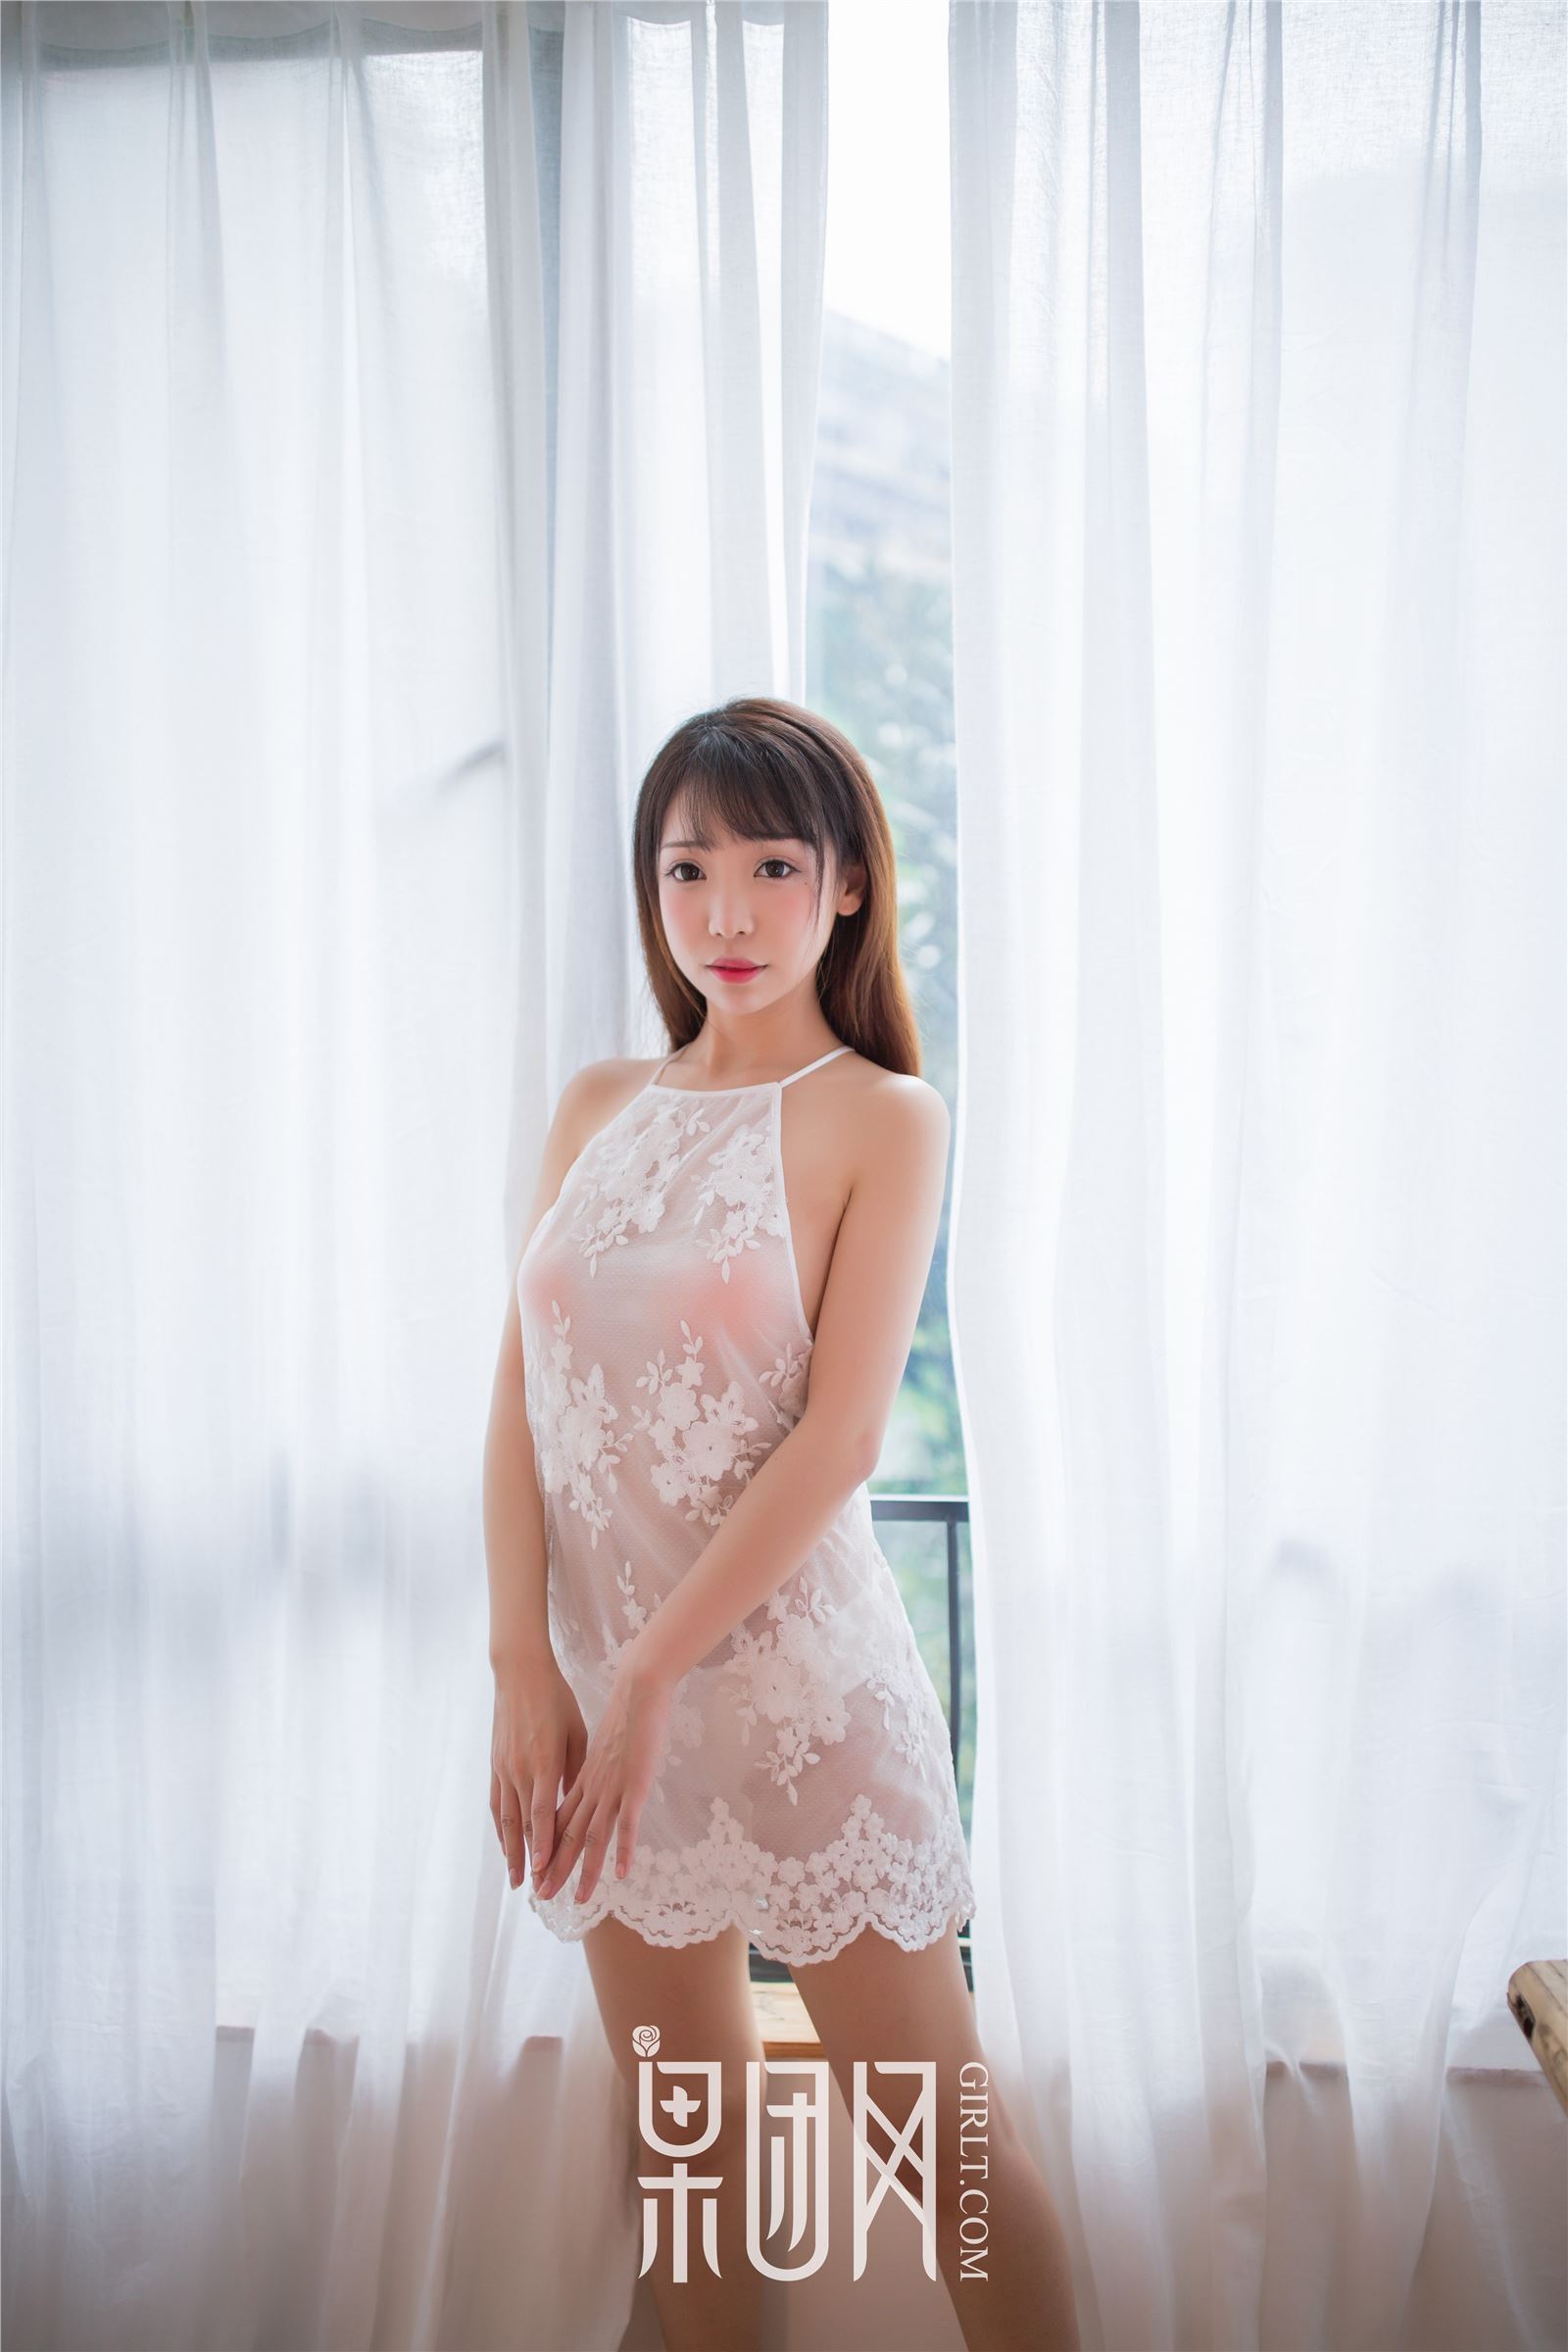 [girl] Kawasaki kumagawa Jixin 2018.01.06 no.012 lovely Lori lace temptation